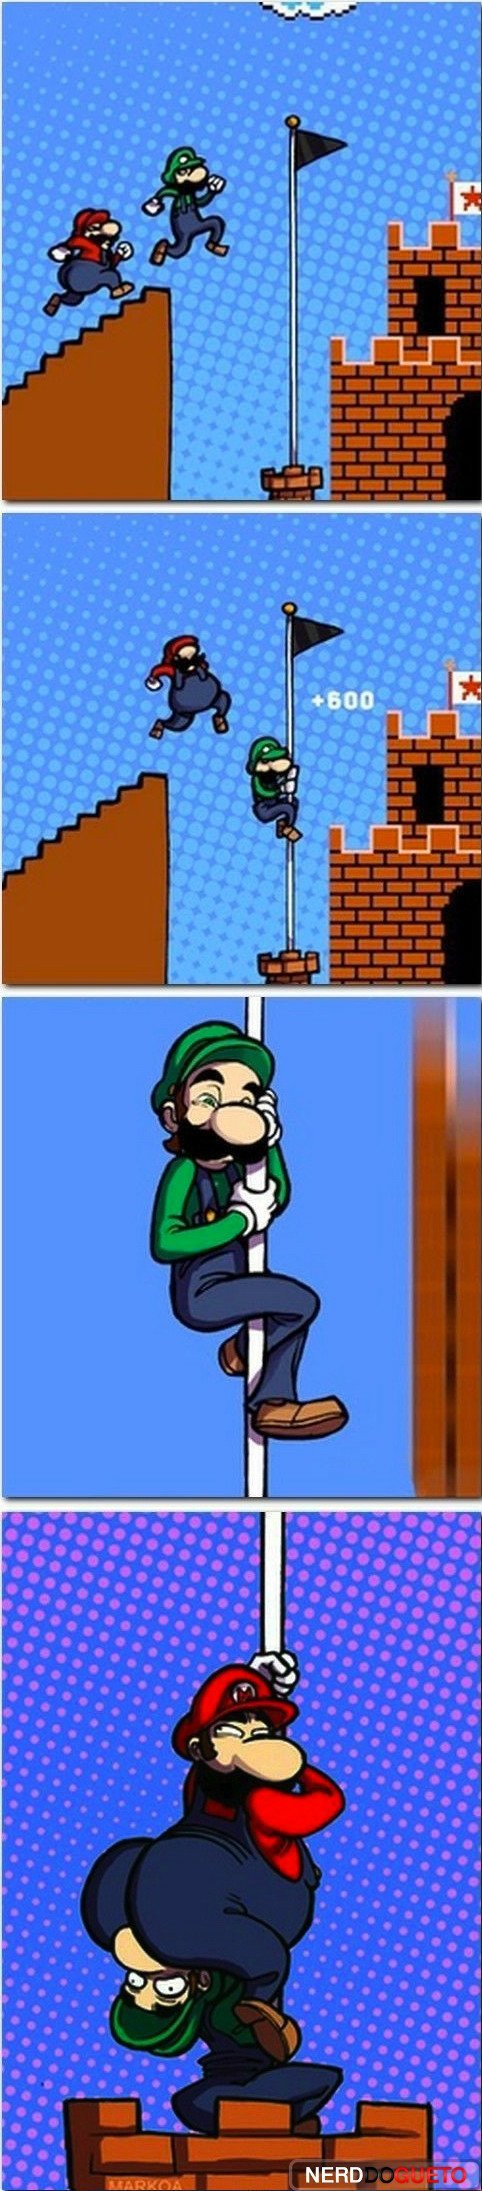 Ese Mario bros culon - meme